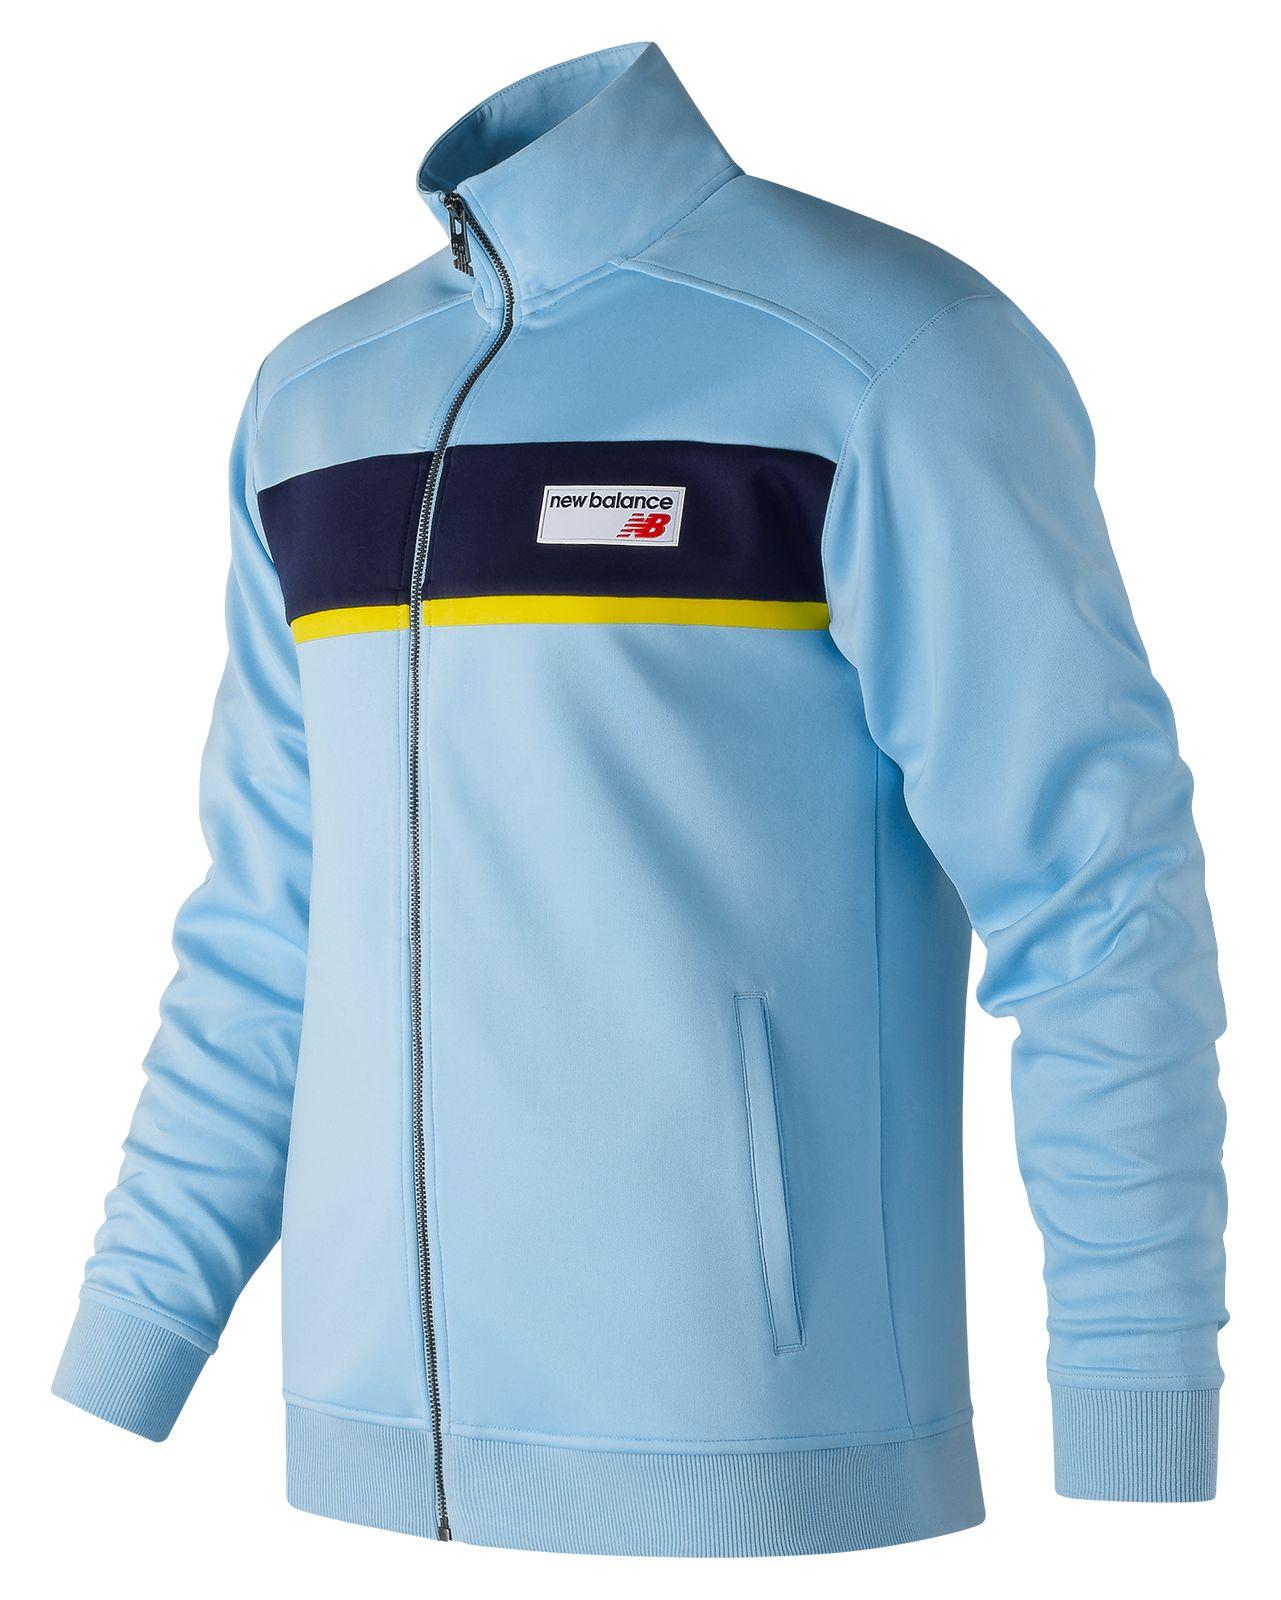 nb athletics track jacket